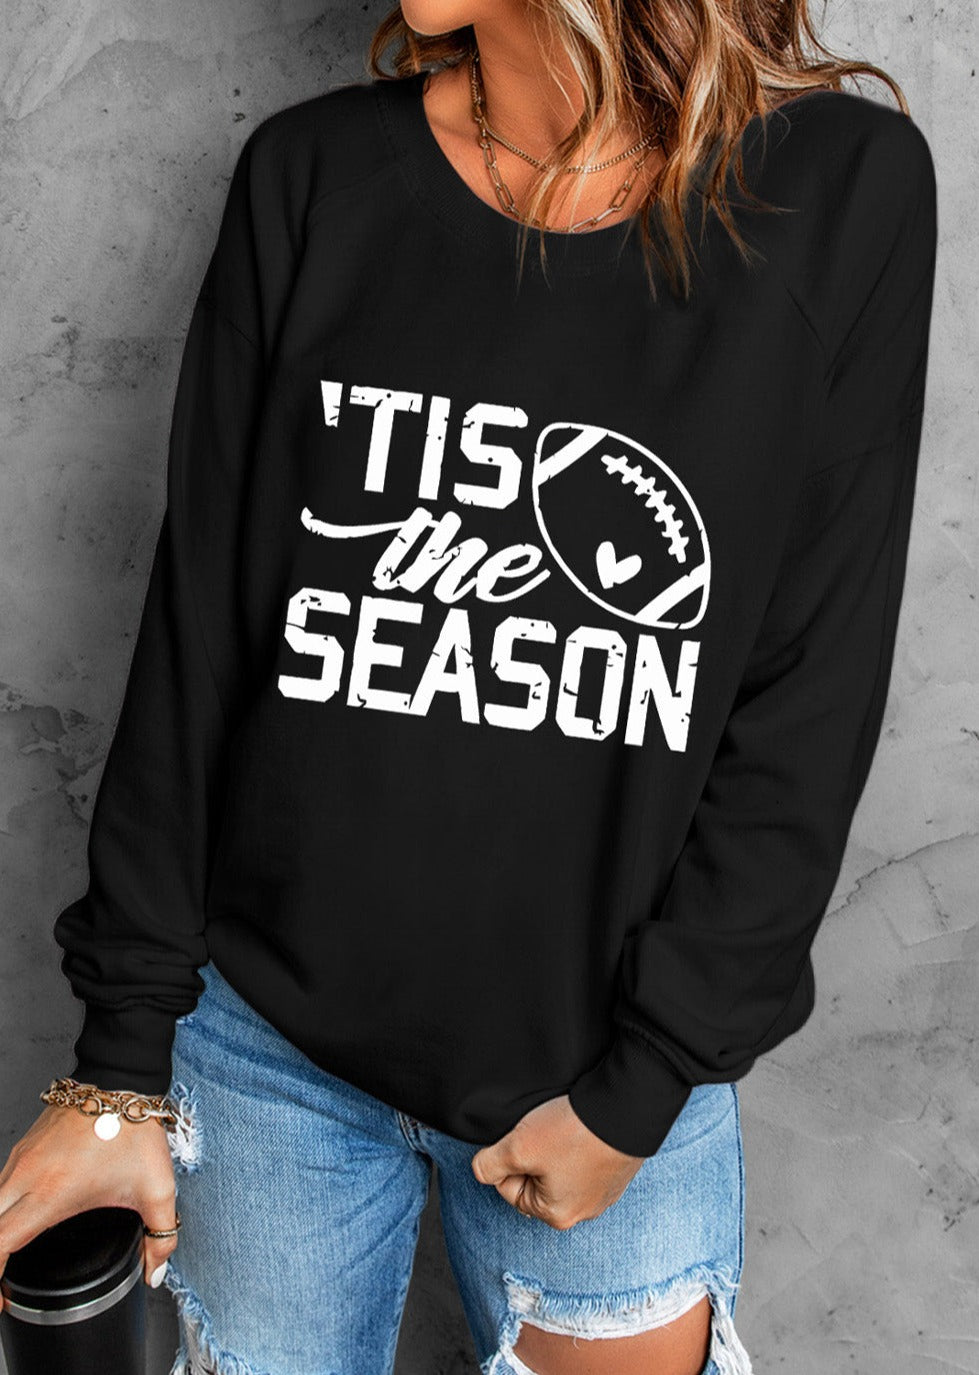 Tis the Season Football Graphic Sweatshirt - Cheeky Chic Boutique